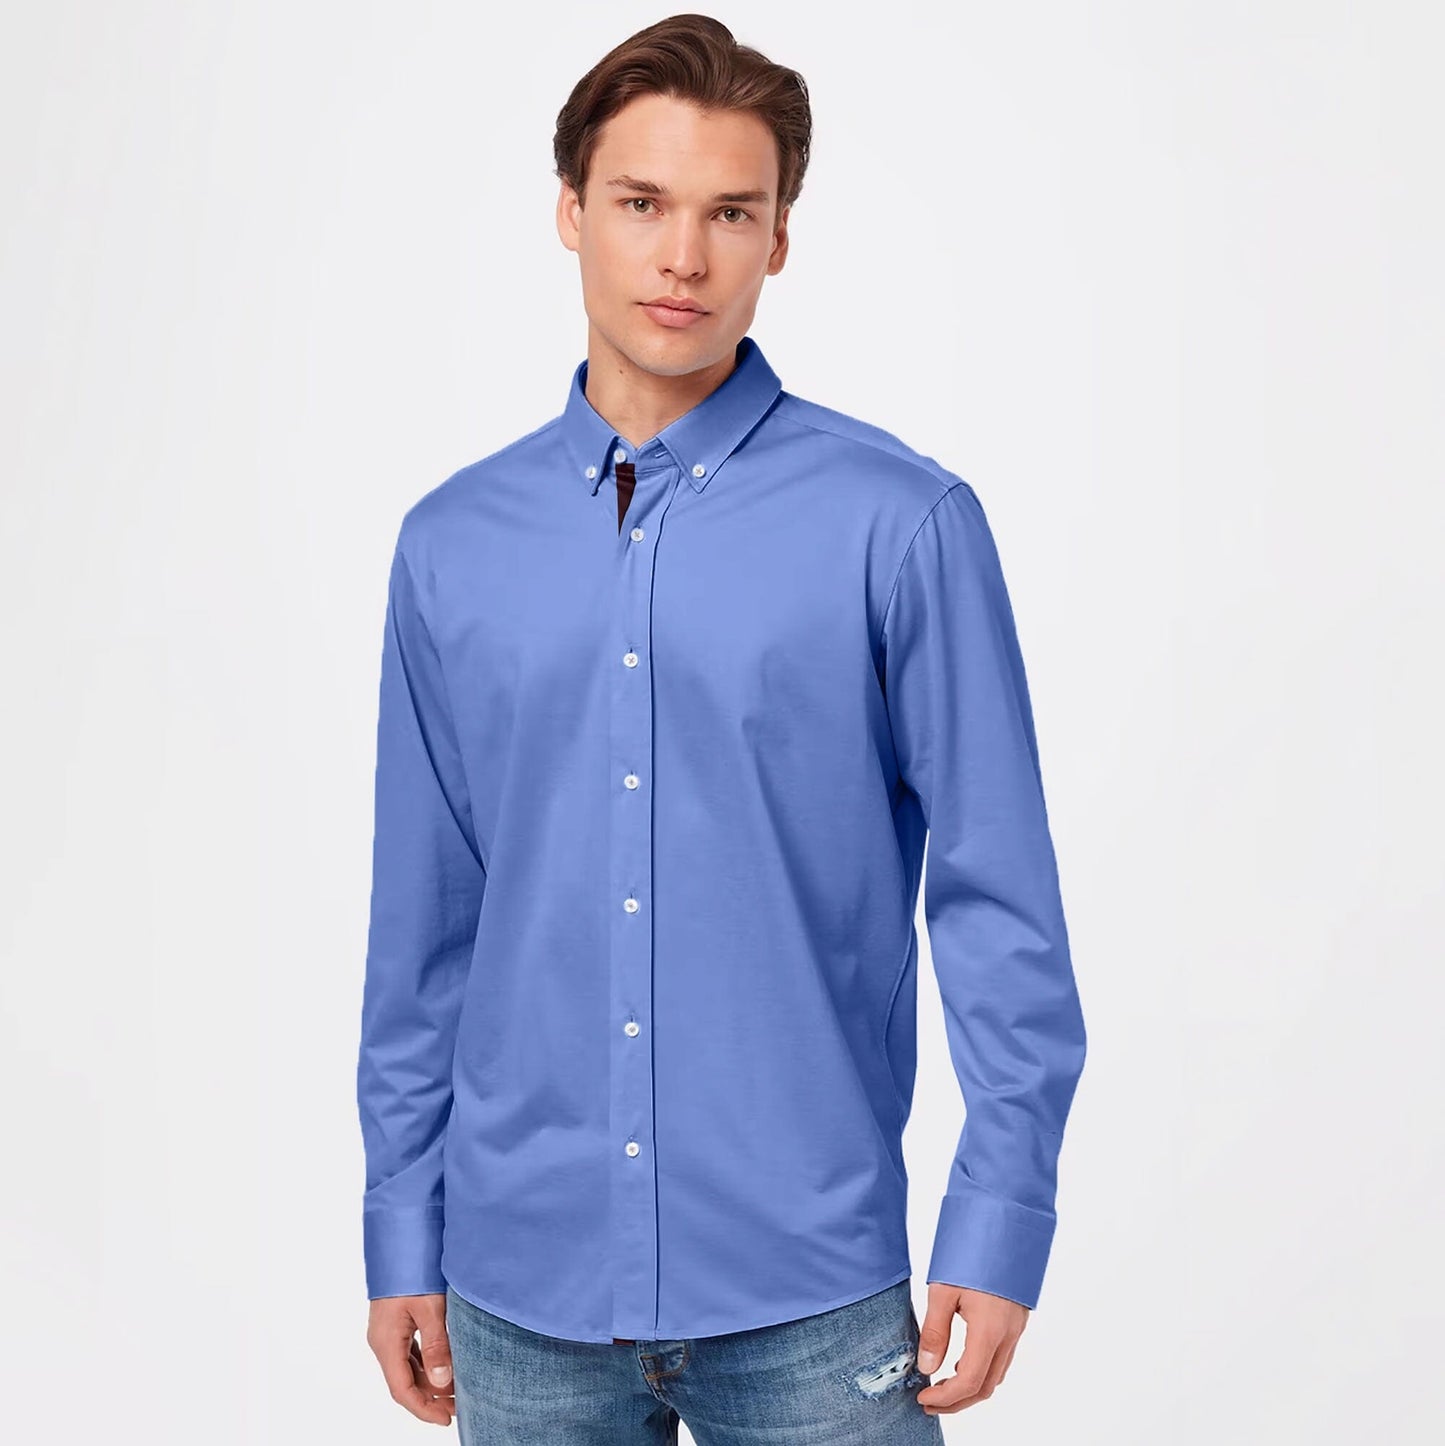 Eternity Men's Formal Button Down Dress Shirt Men's Casual Shirt ETY Powder Blue S (15) 